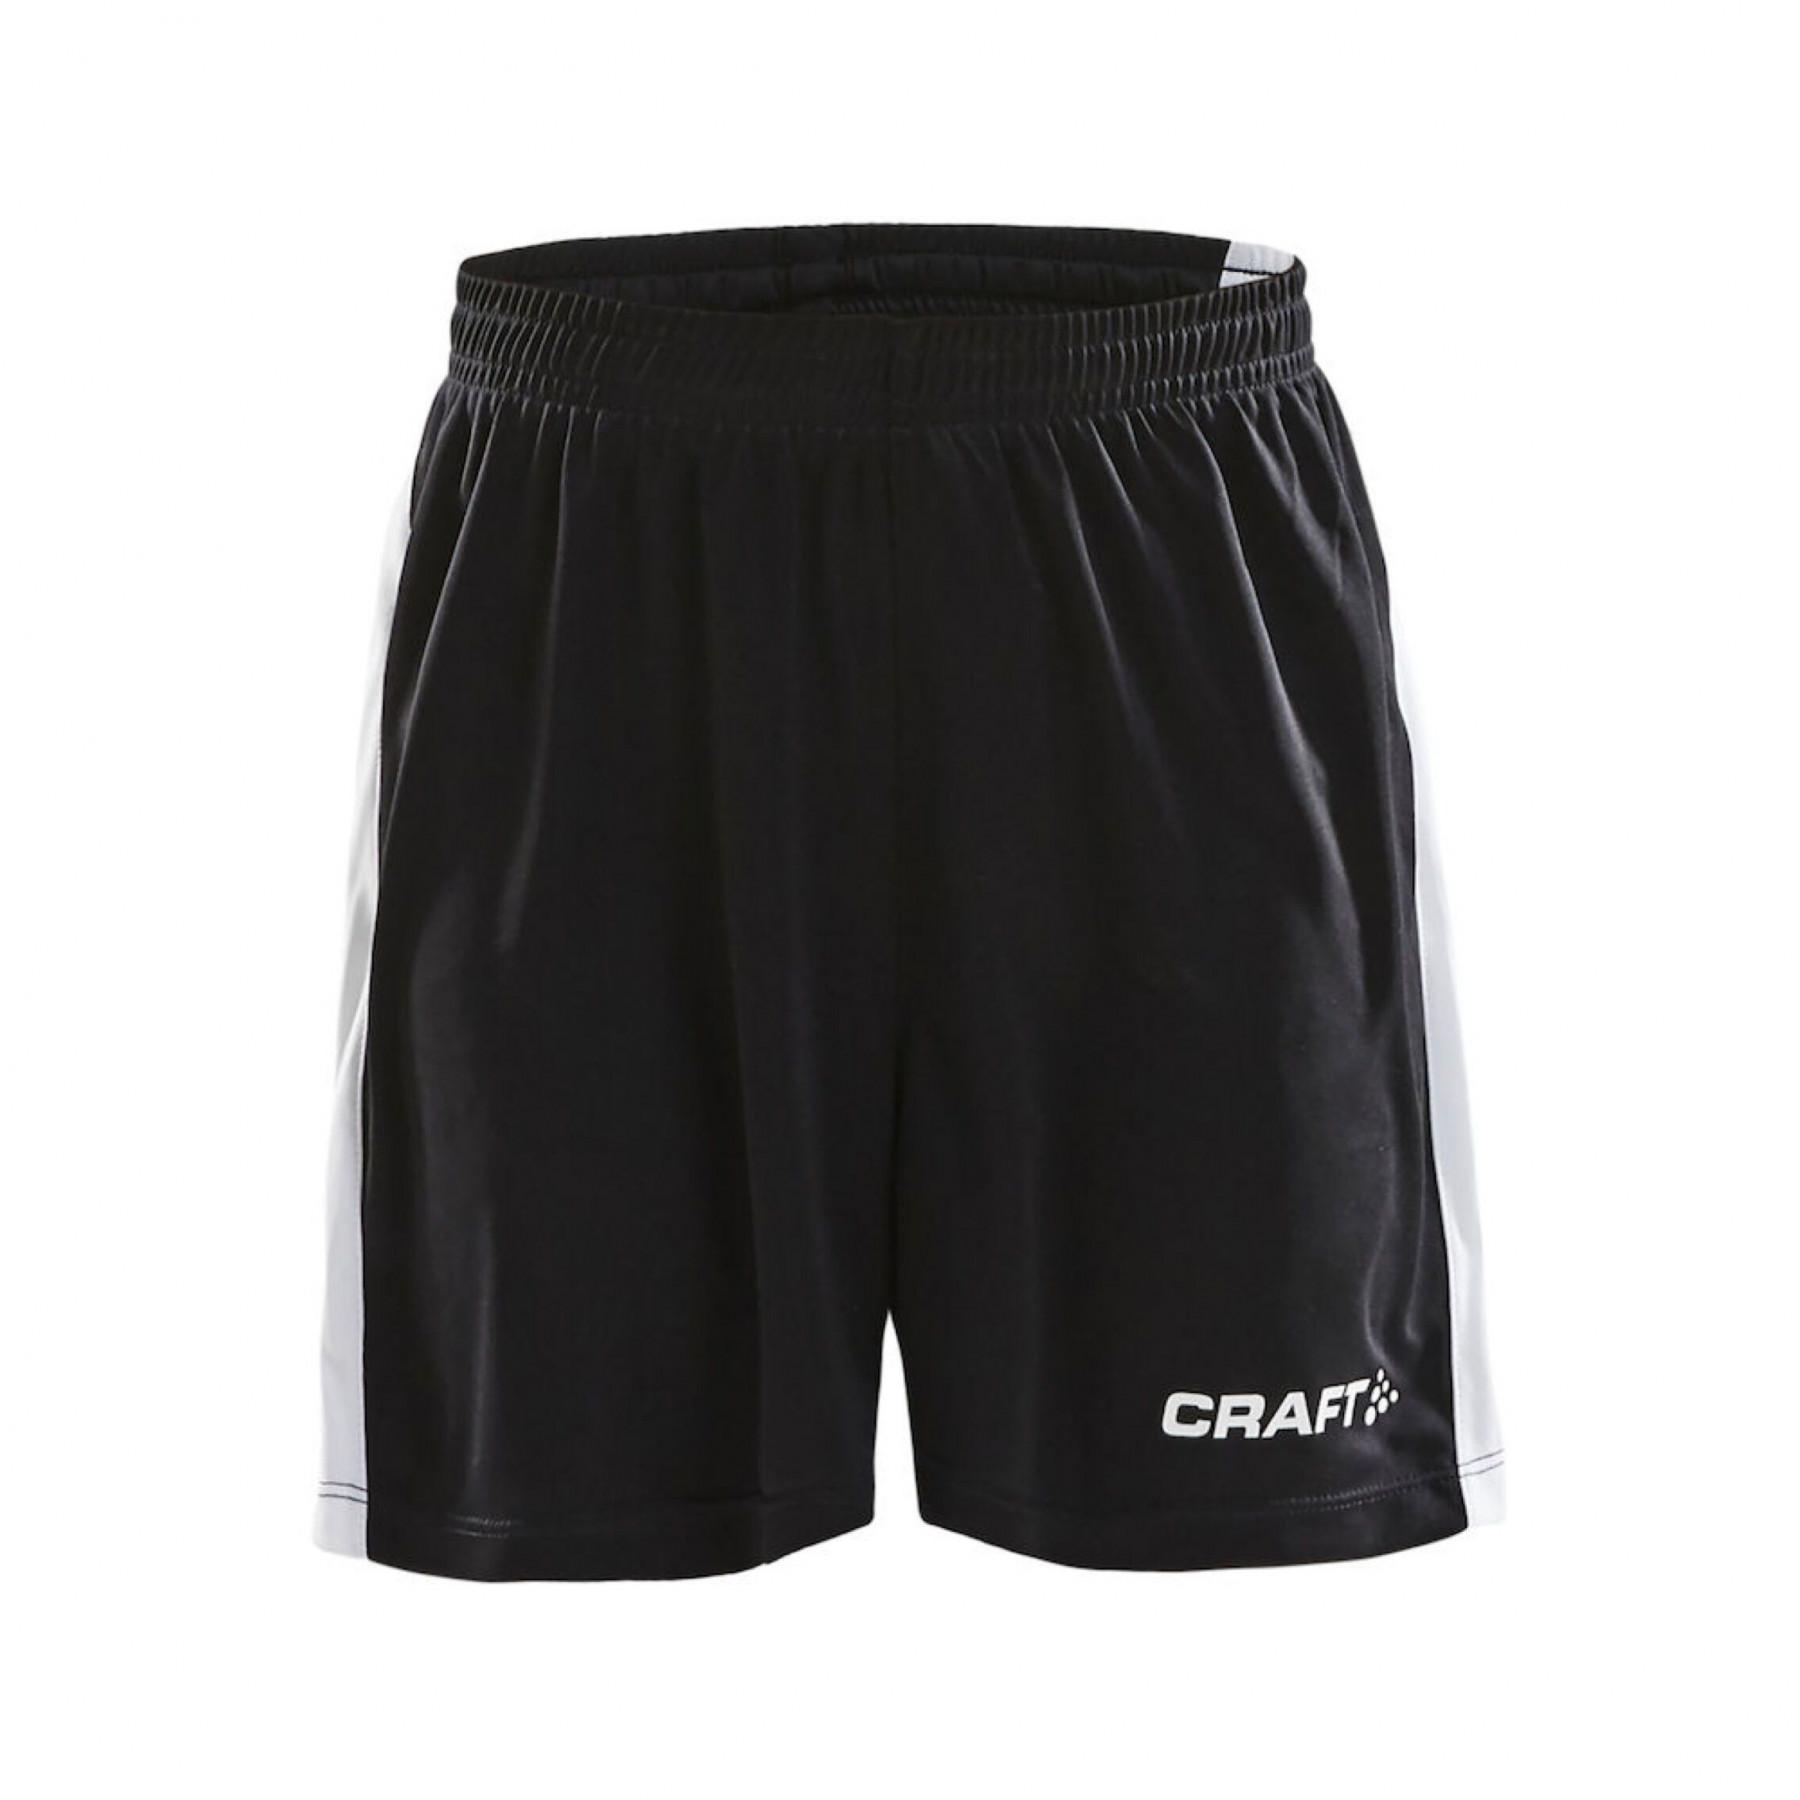 Children's shorts Craft pro control longer